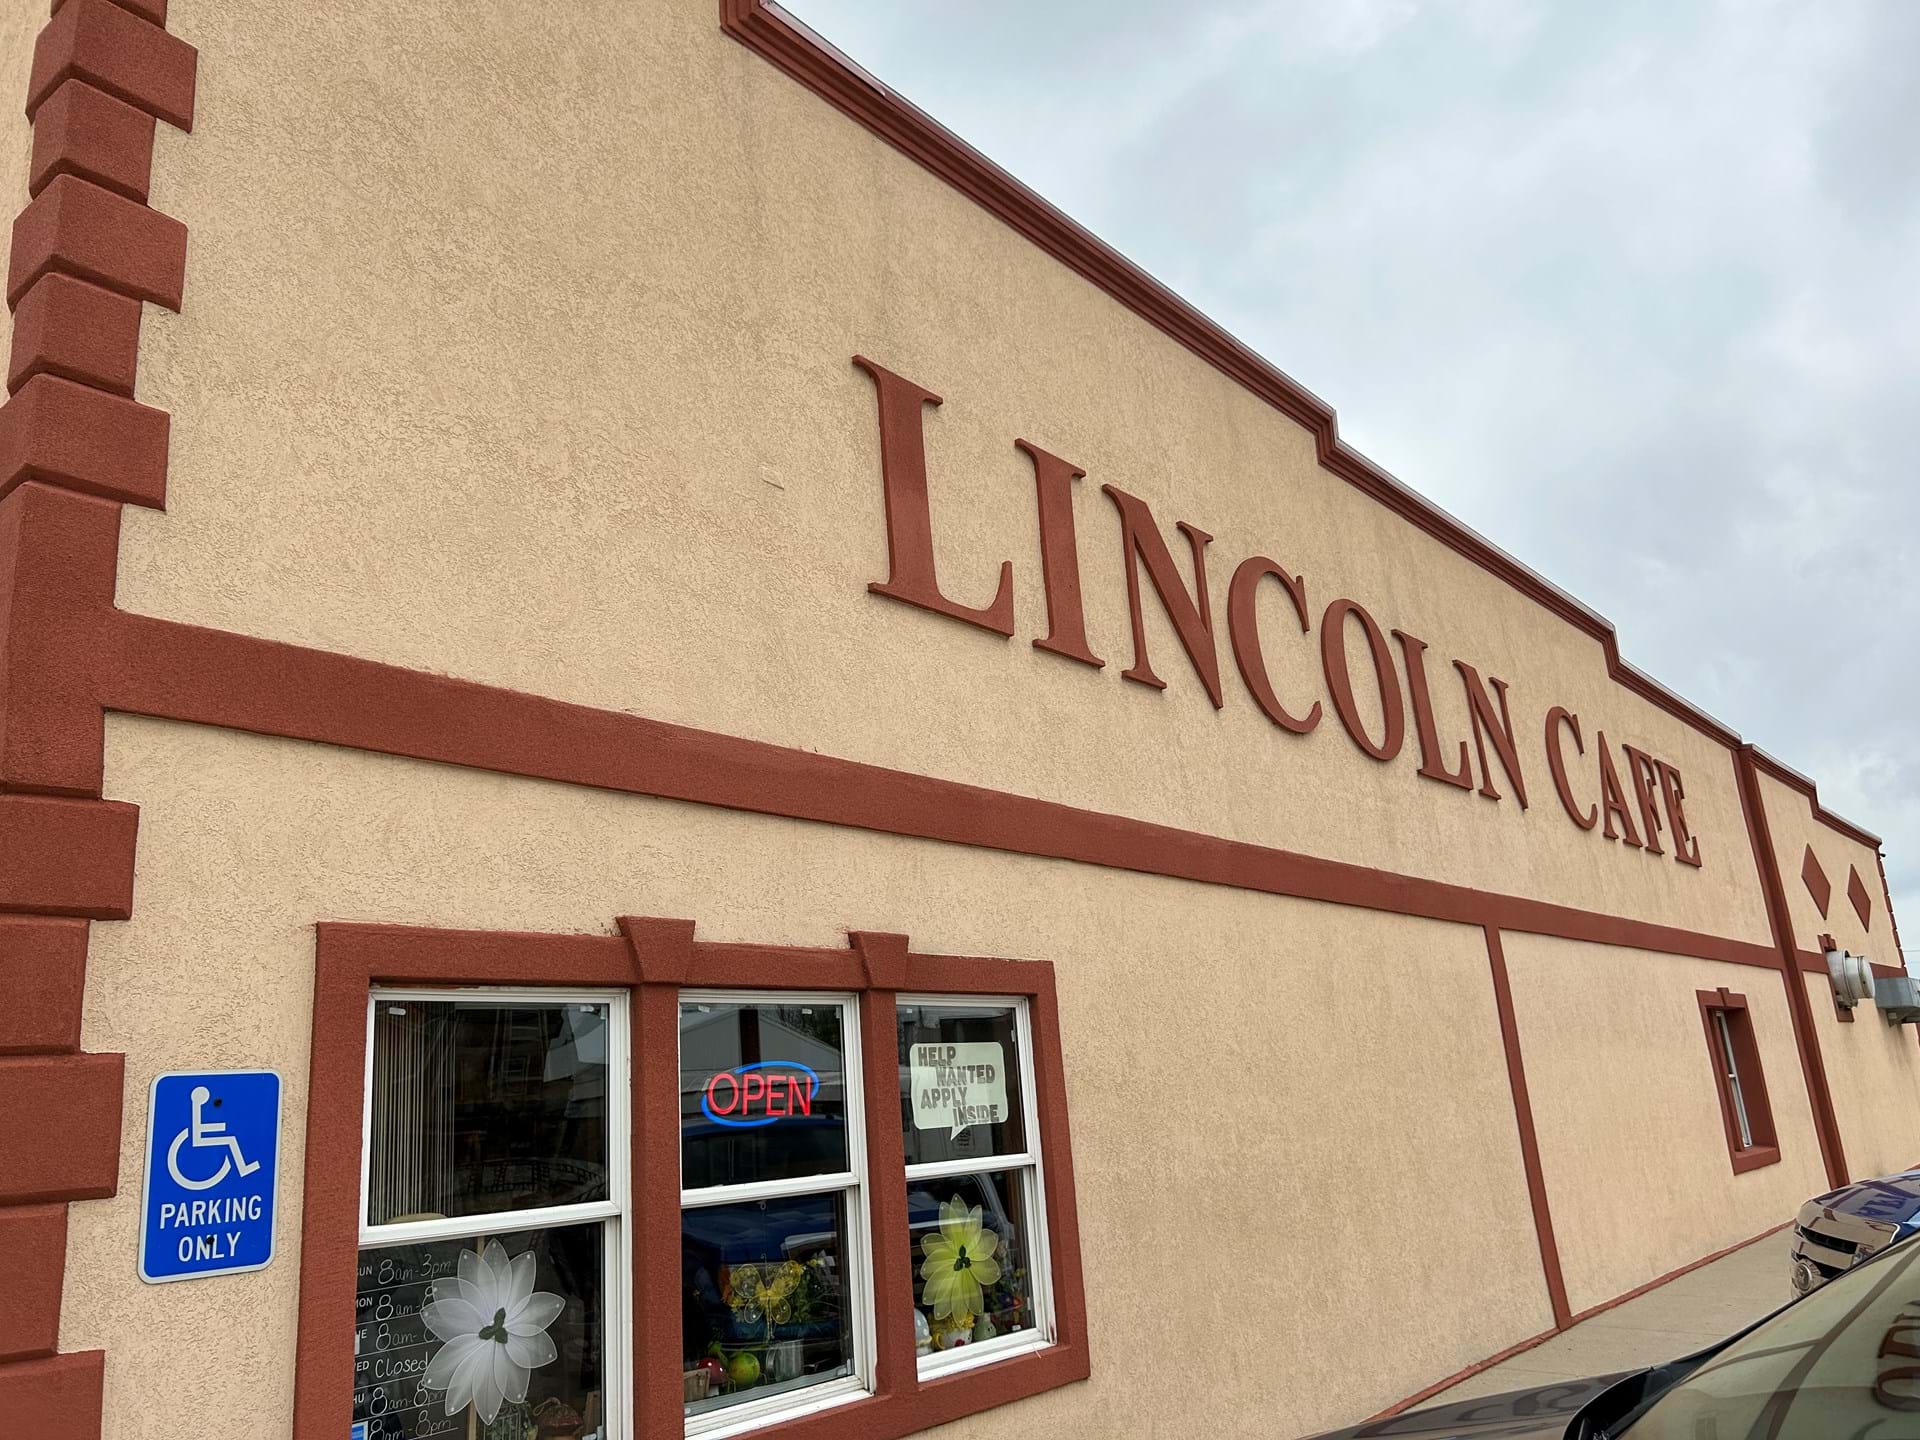 Lincoln Cafe exterior